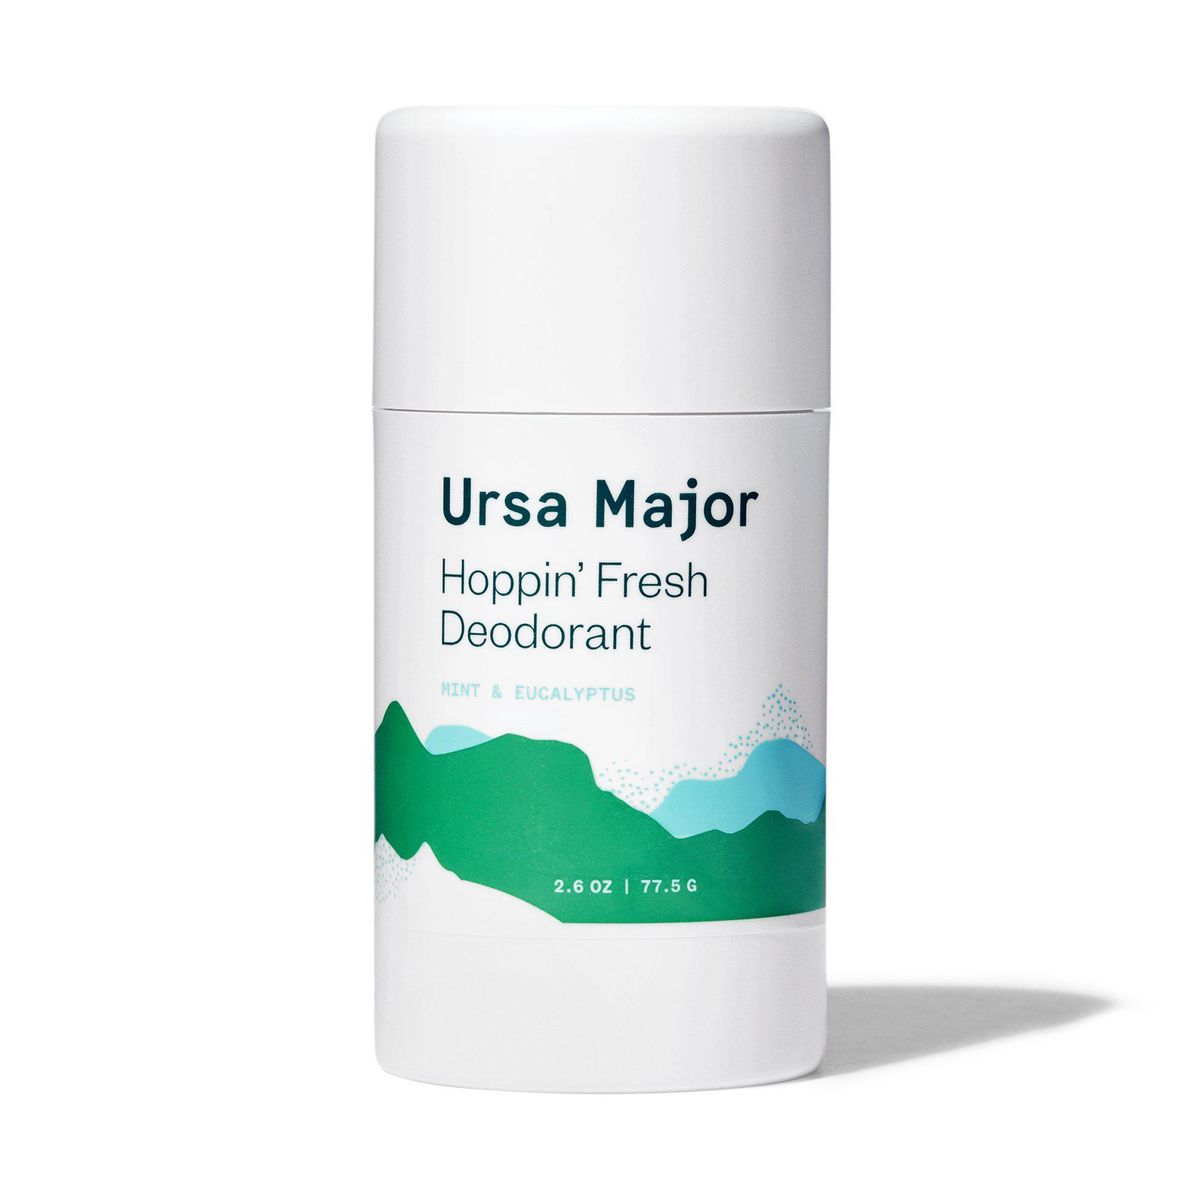 ursa major hoppin fresh deodorant